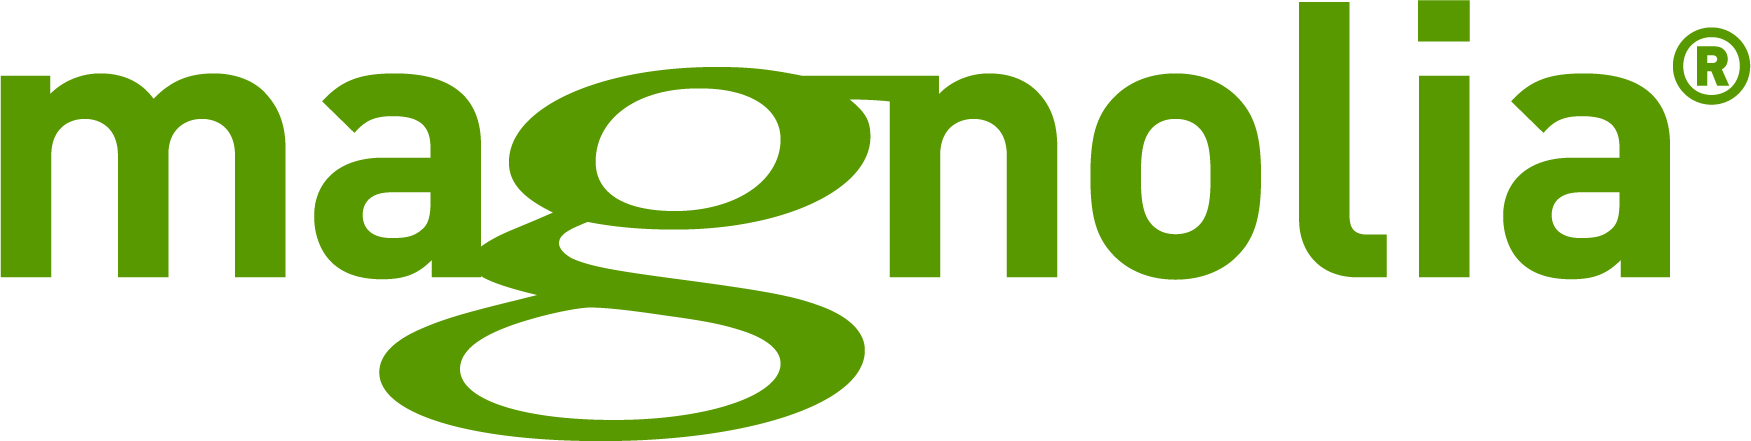 Logo des Unternehmens Magnolia CMS.